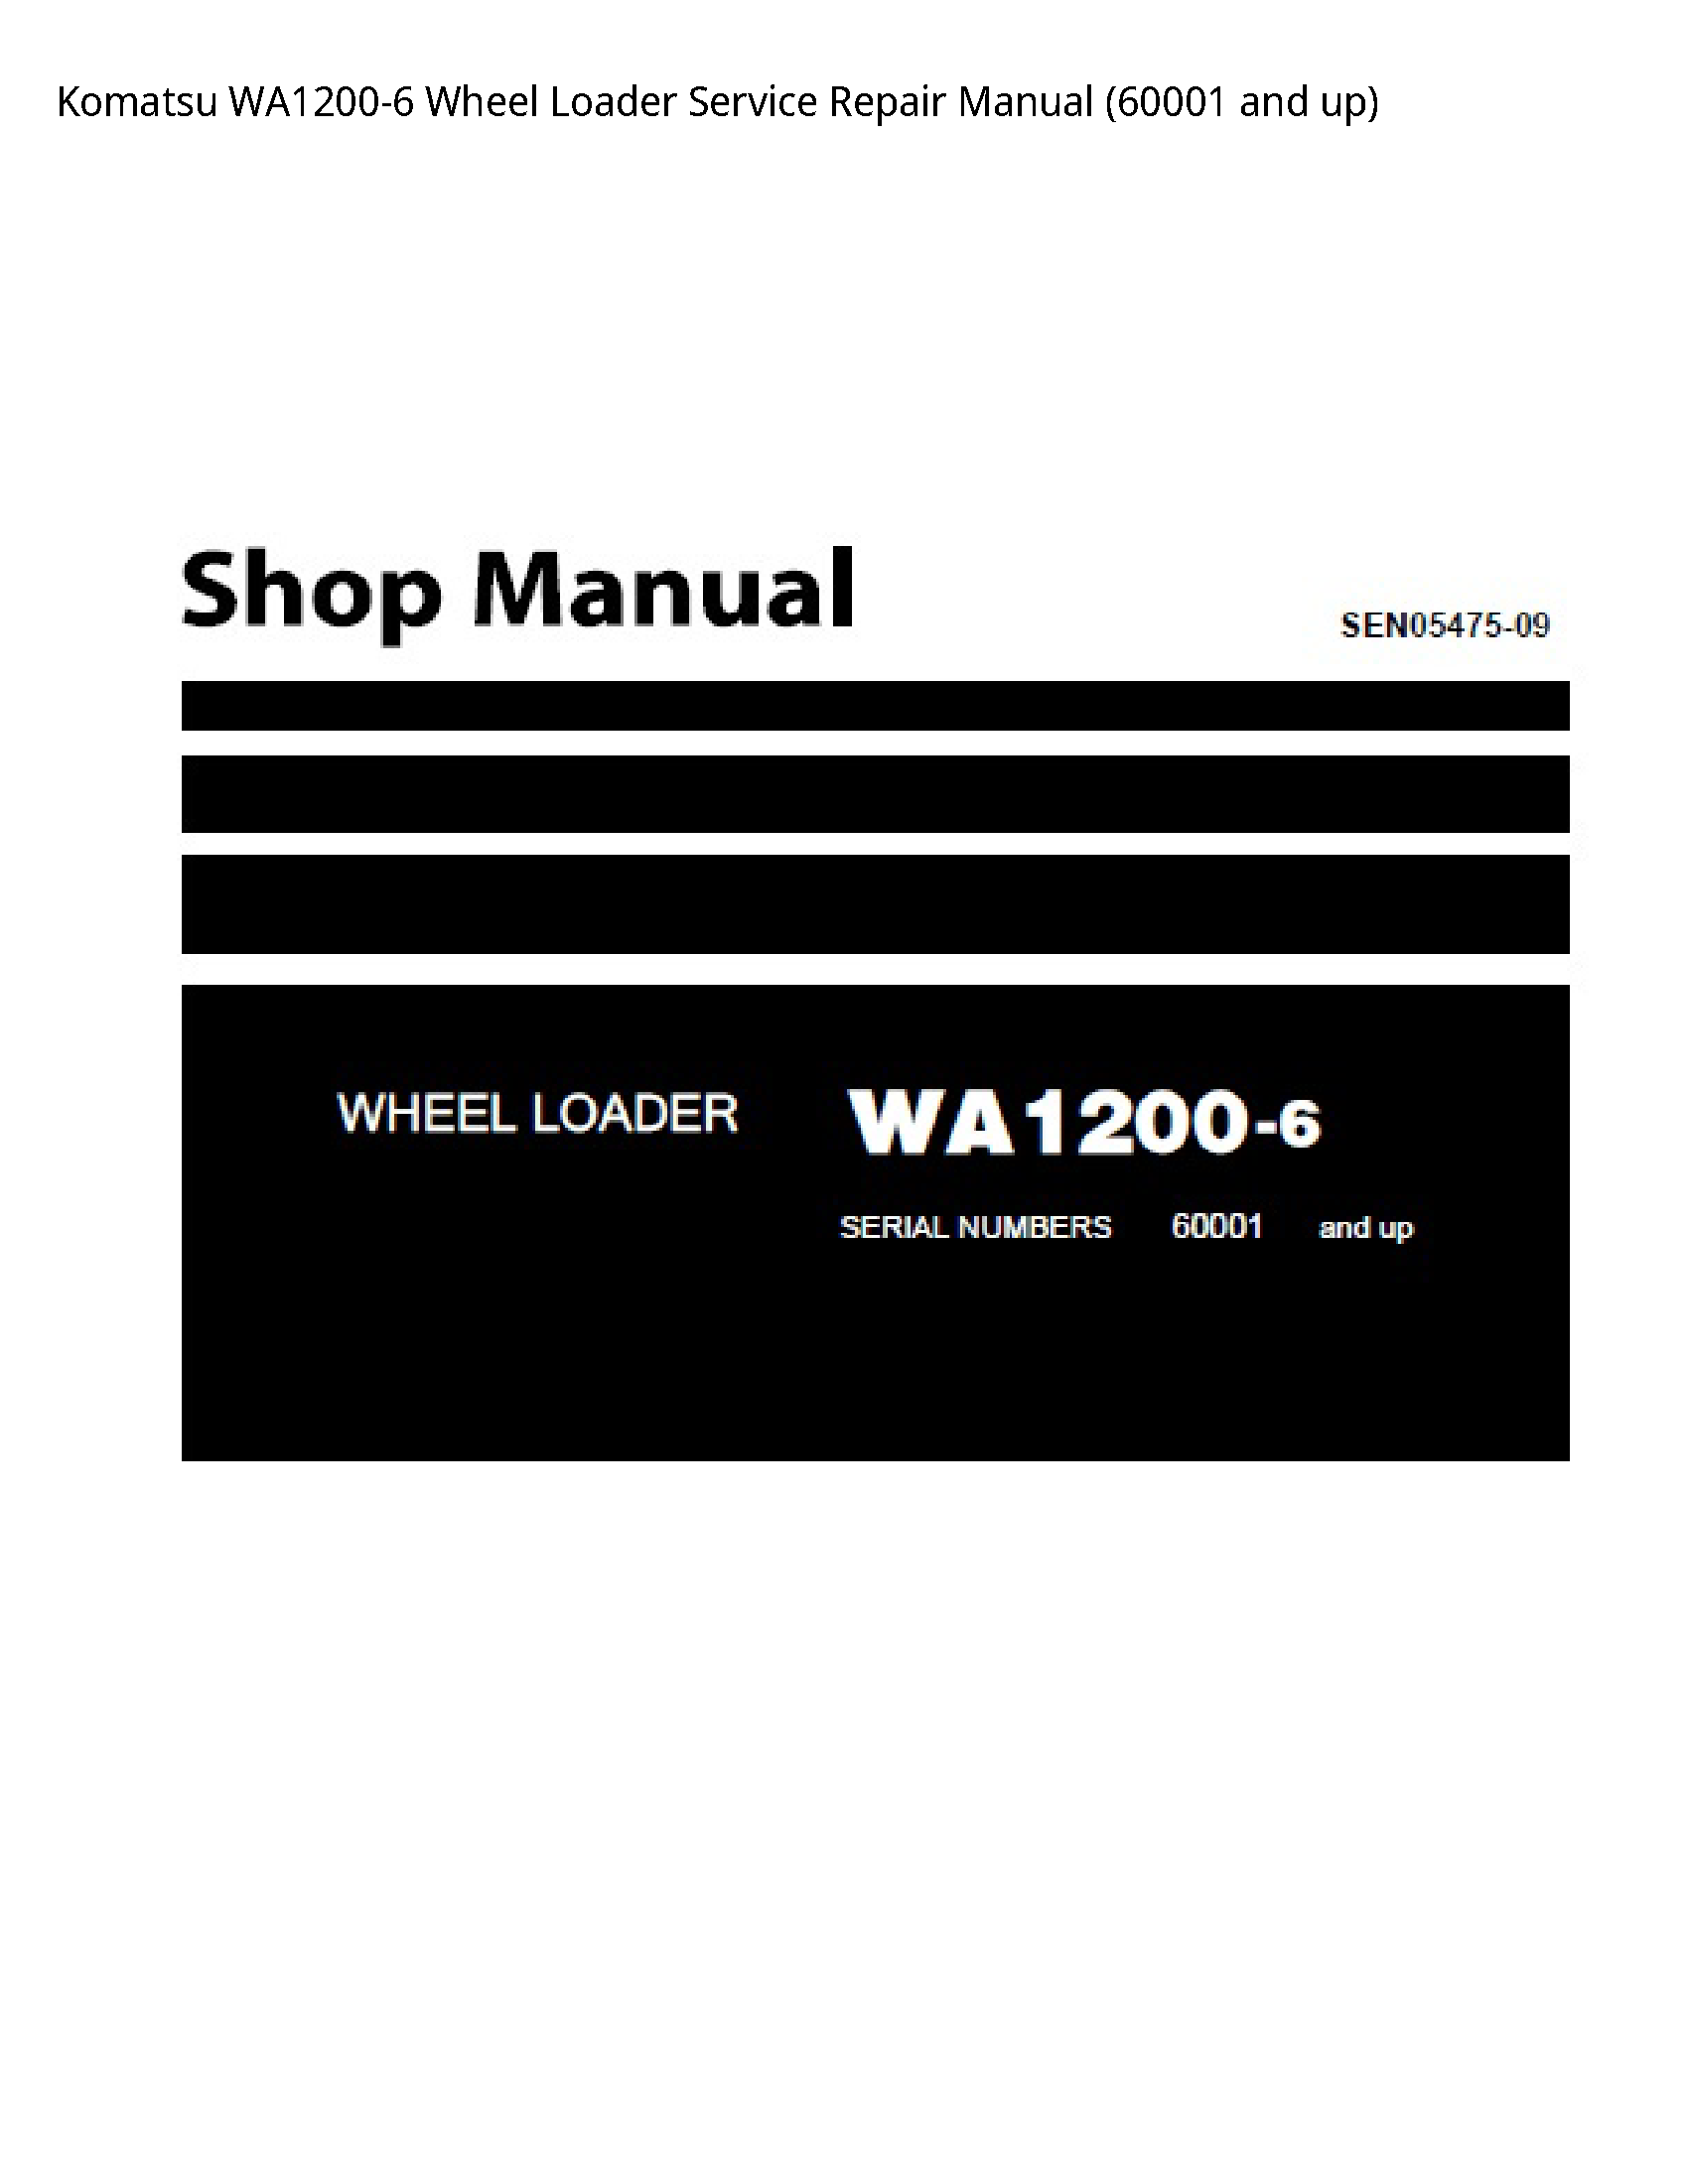 KOMATSU WA1200-6 Wheel Loader manual